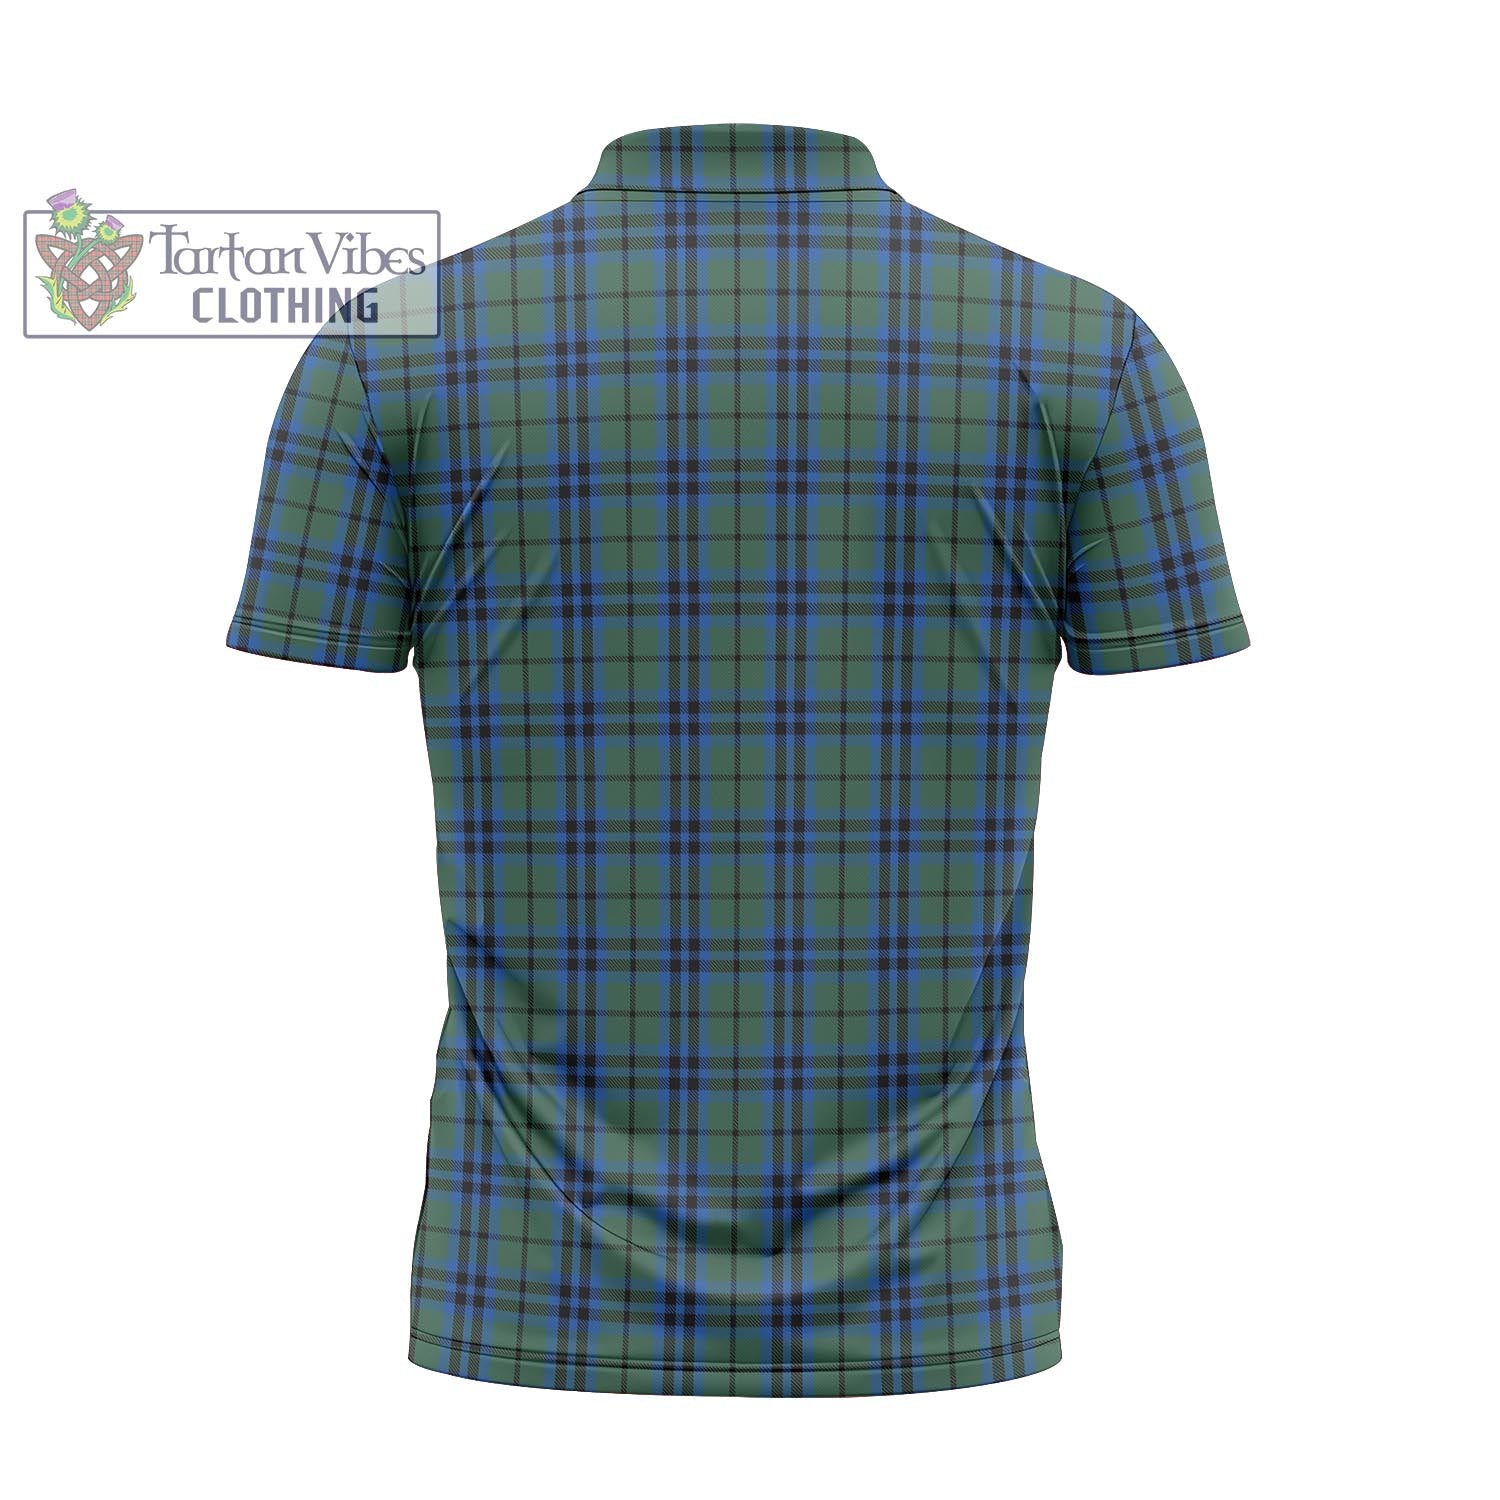 Tartan Vibes Clothing Keith Tartan Zipper Polo Shirt with Family Crest